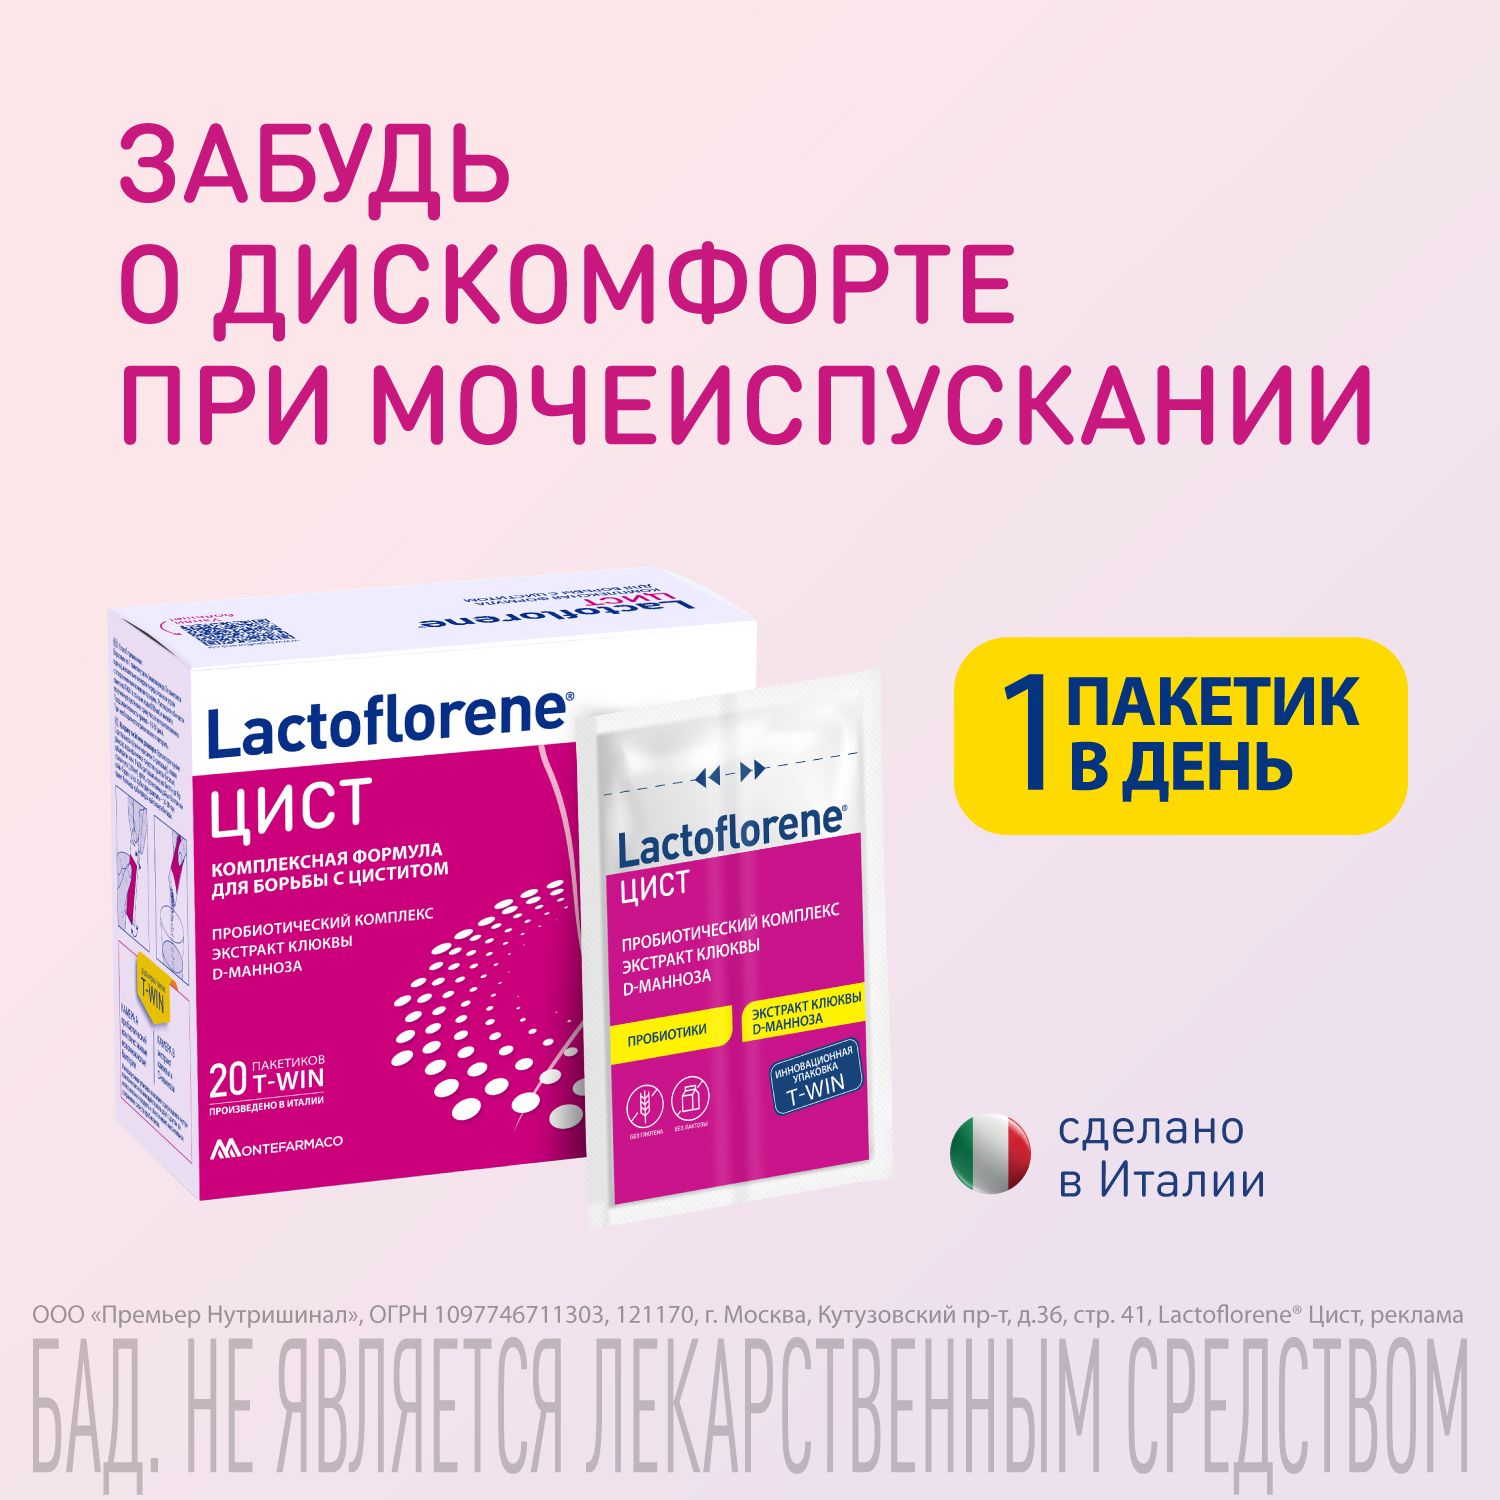 ПробиотическийкомплексLactofloreneЦИСТ,20пакетиков